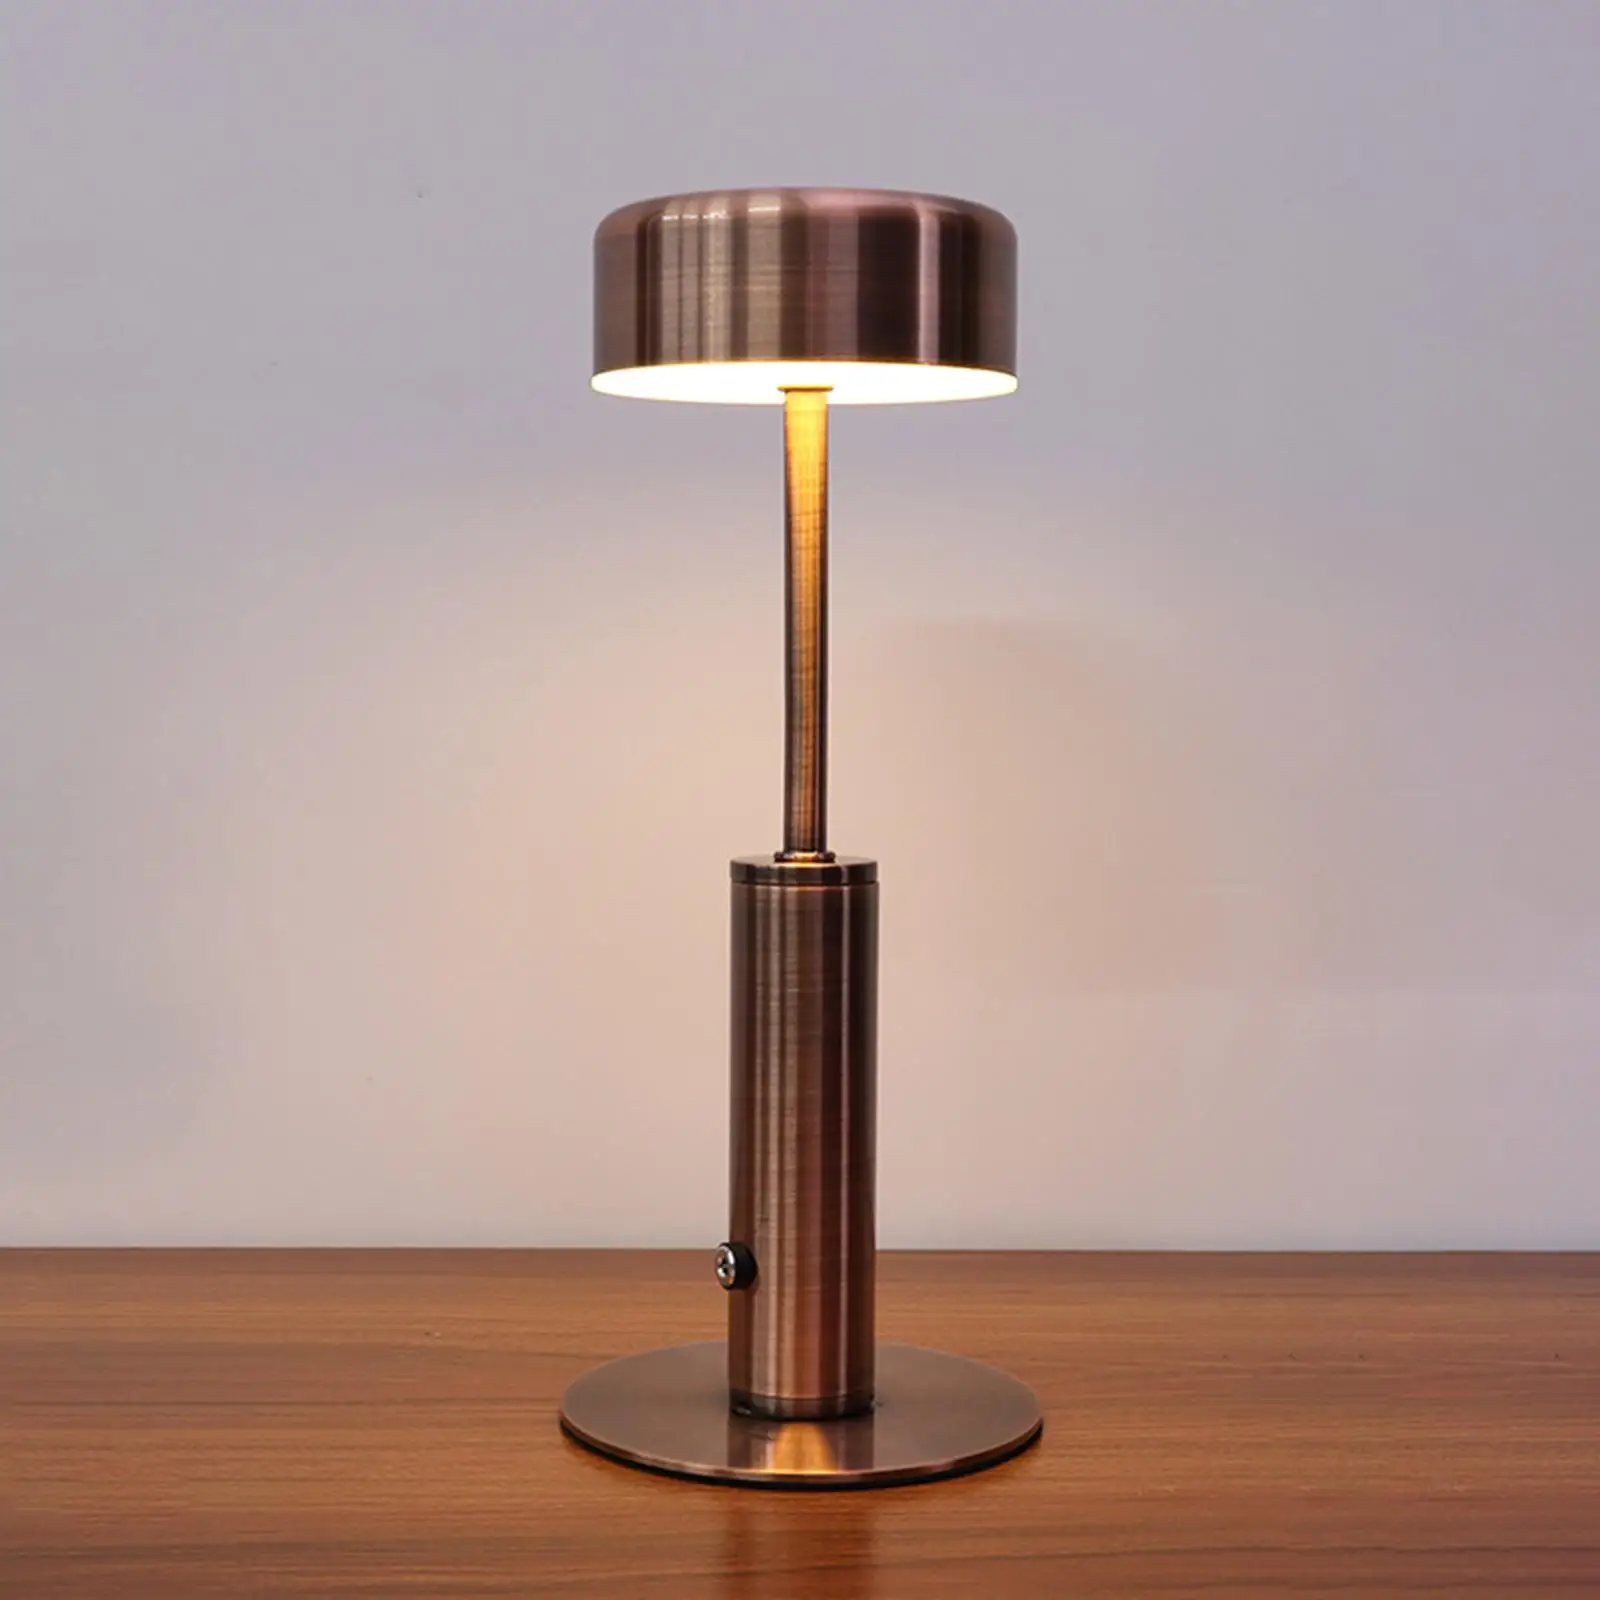 Modern Night Light 2W , 3 Levels Brightness, Wireless Battery Operated Desk Lamp Touch Sensor for Bar Decor Reading Coffee Shop